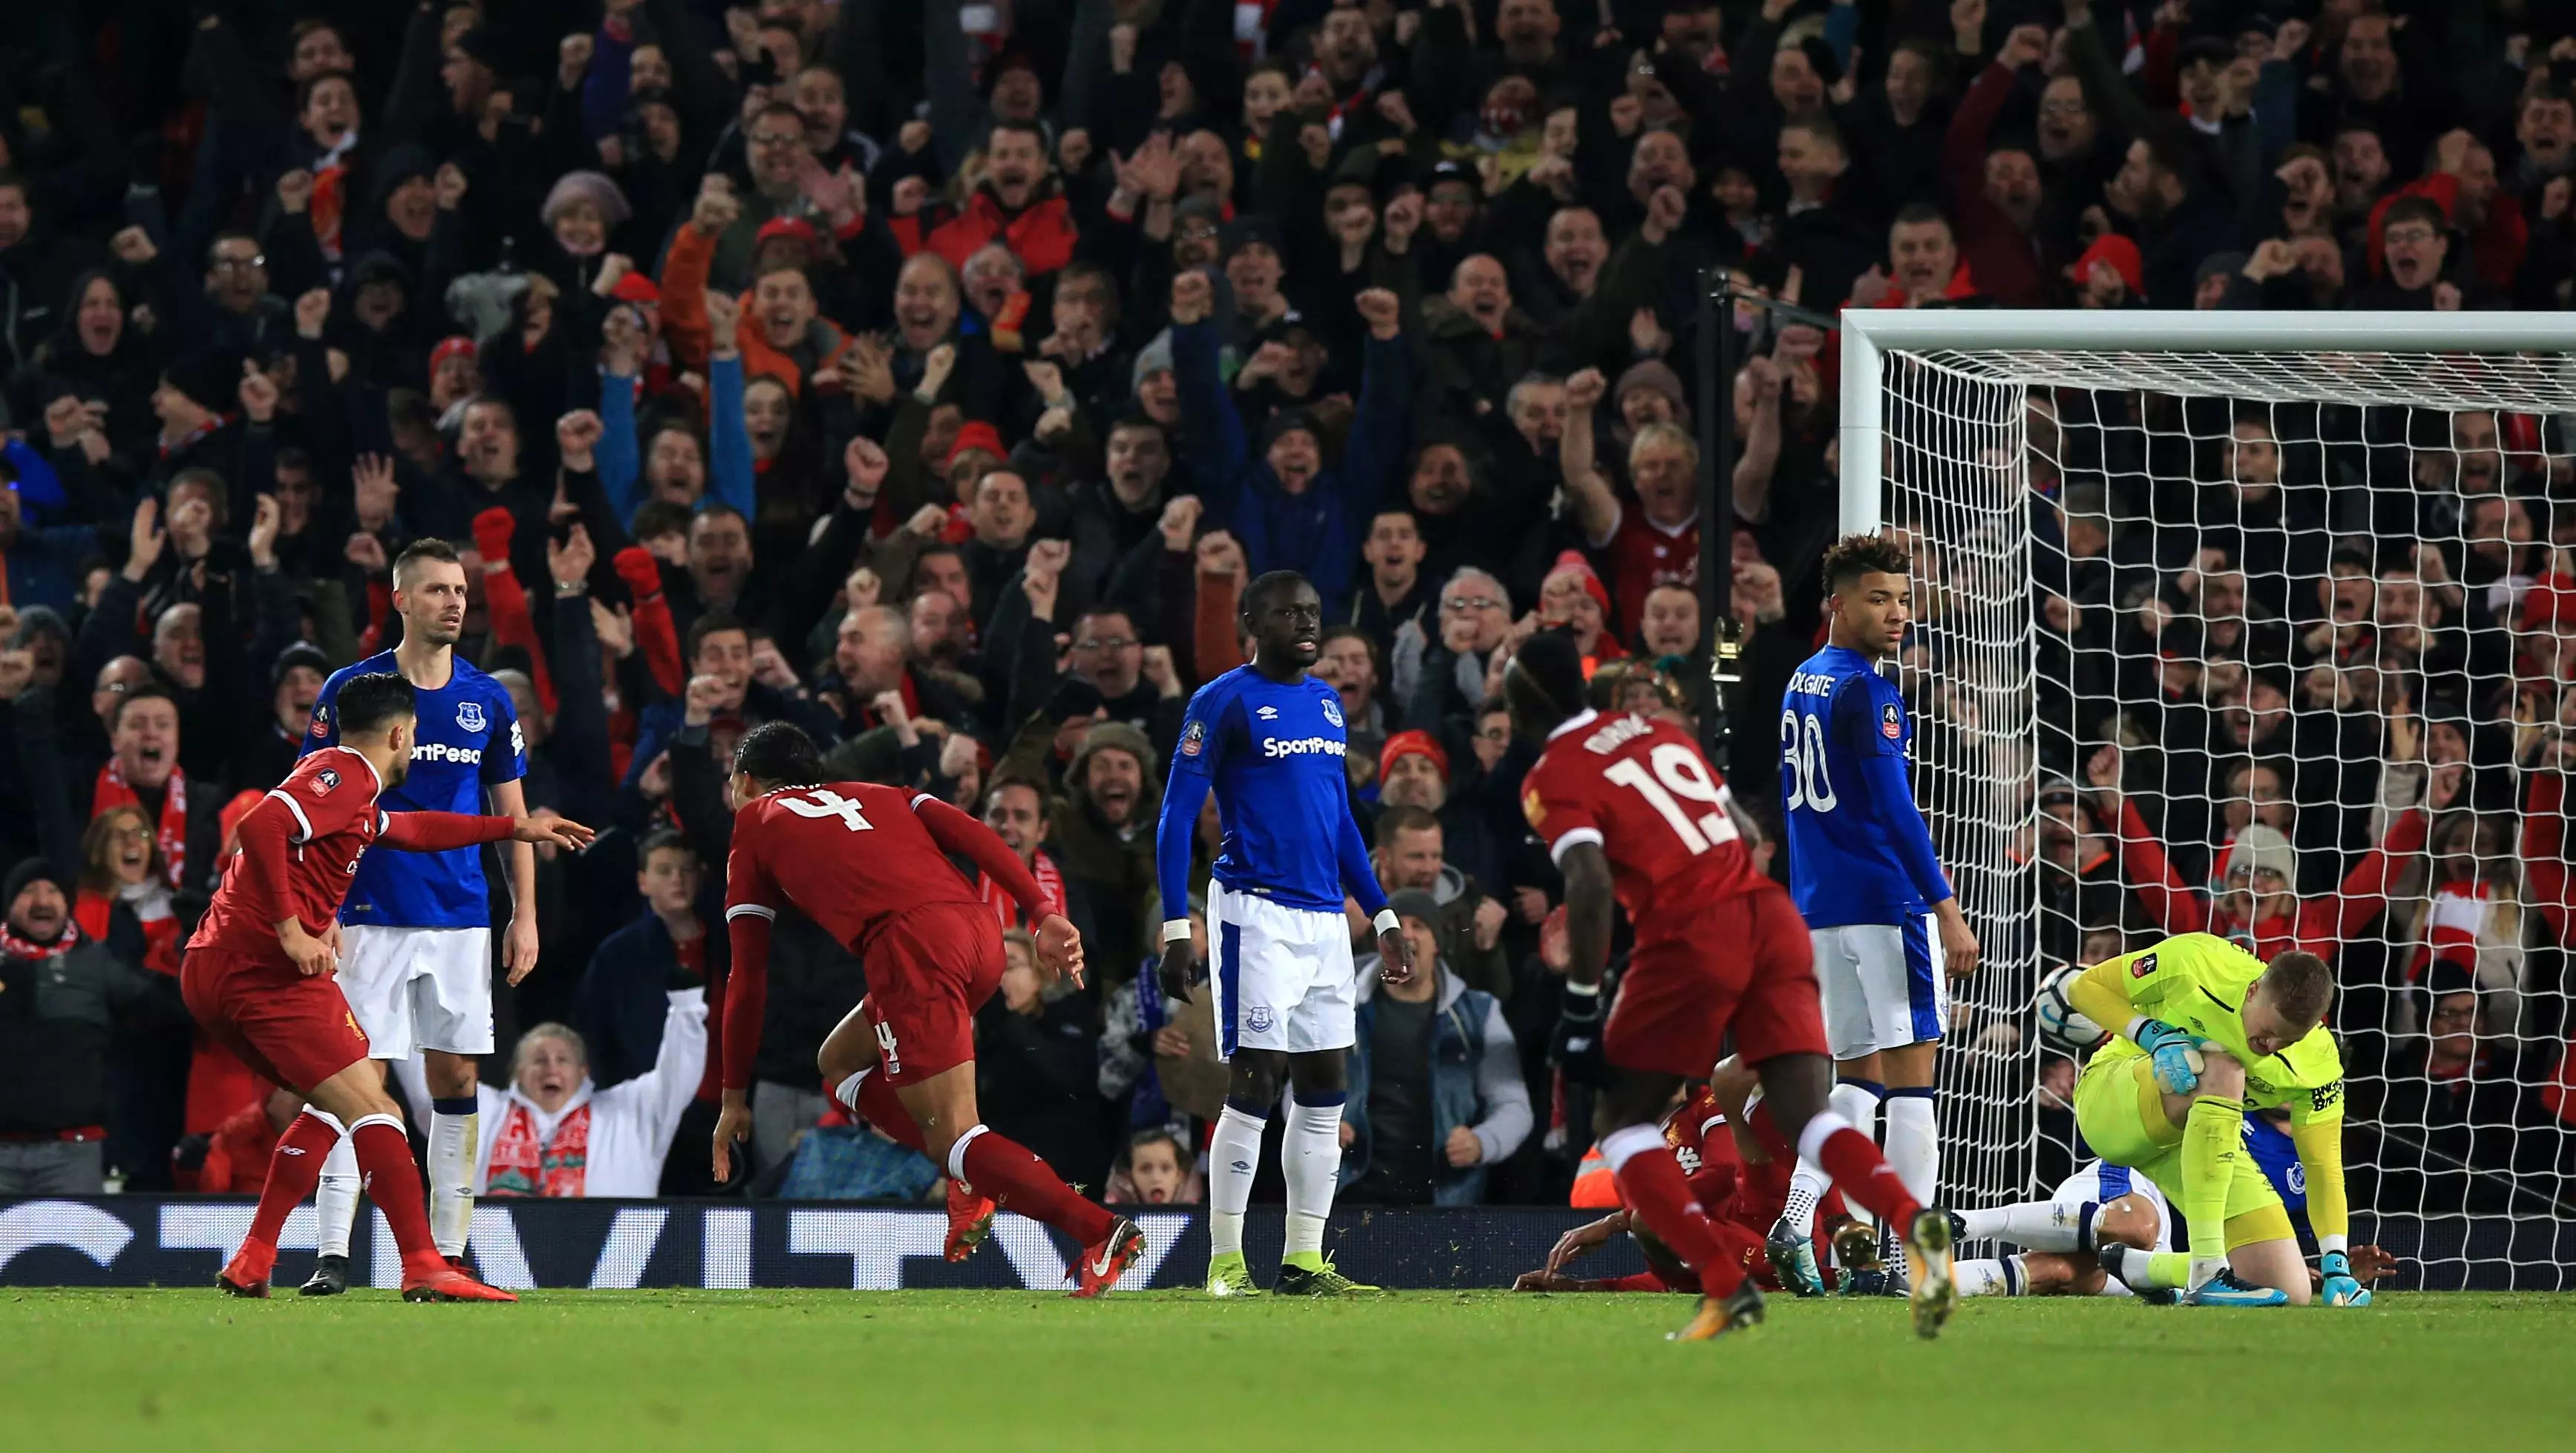 van Dijk wheels away in celebration after scoring against Everton. Image: PA